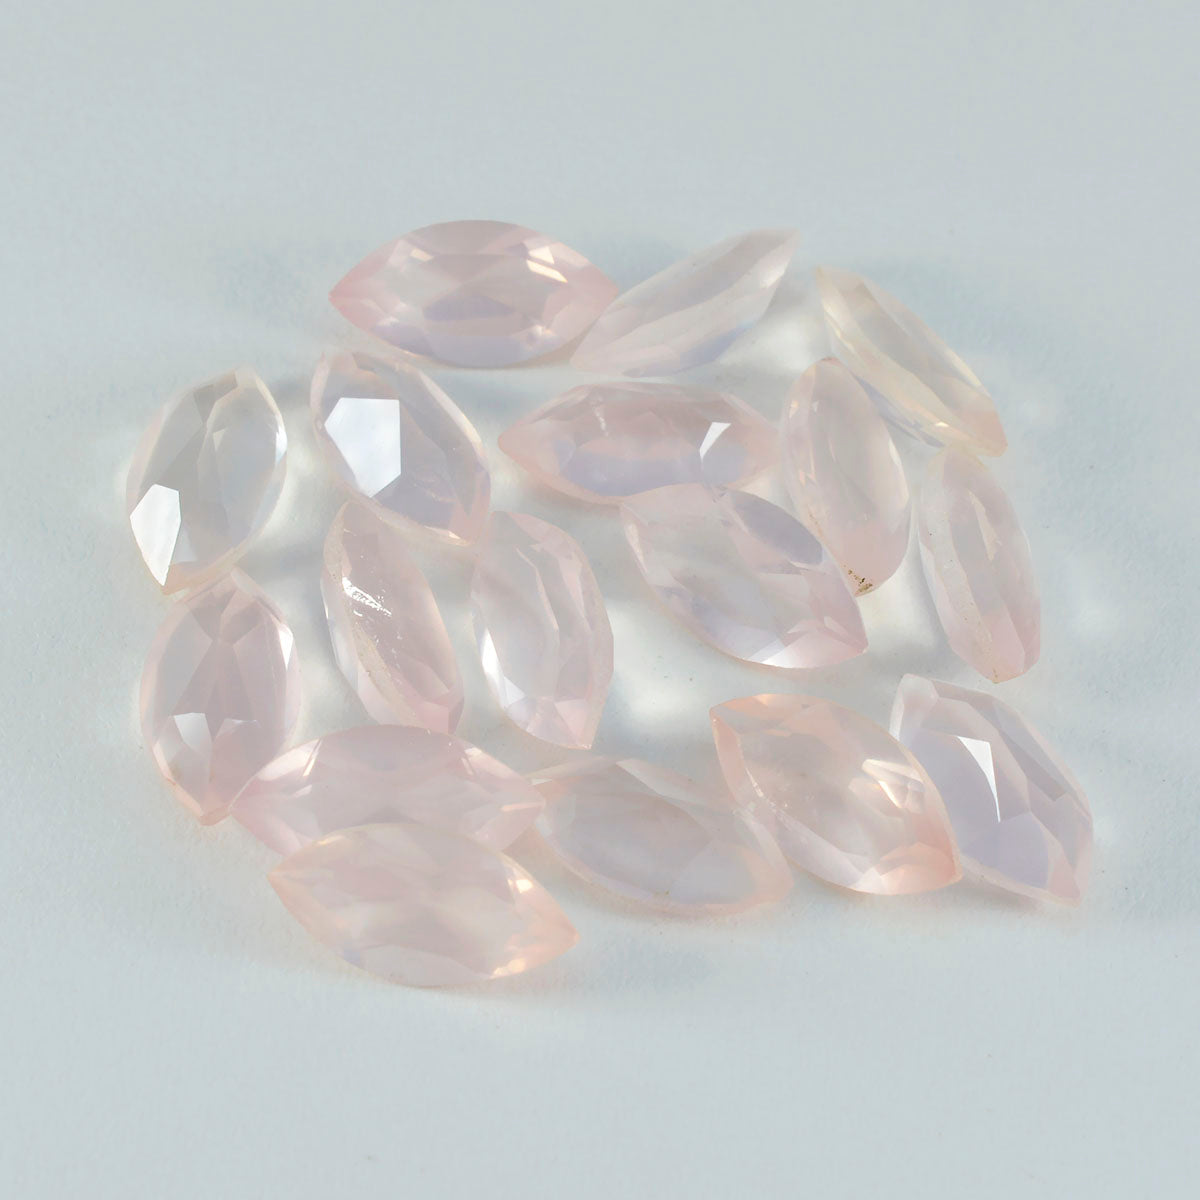 Riyogems 1PC Pink Rose Quartz Faceted 8x16 mm Marquise Shape beautiful Quality Stone